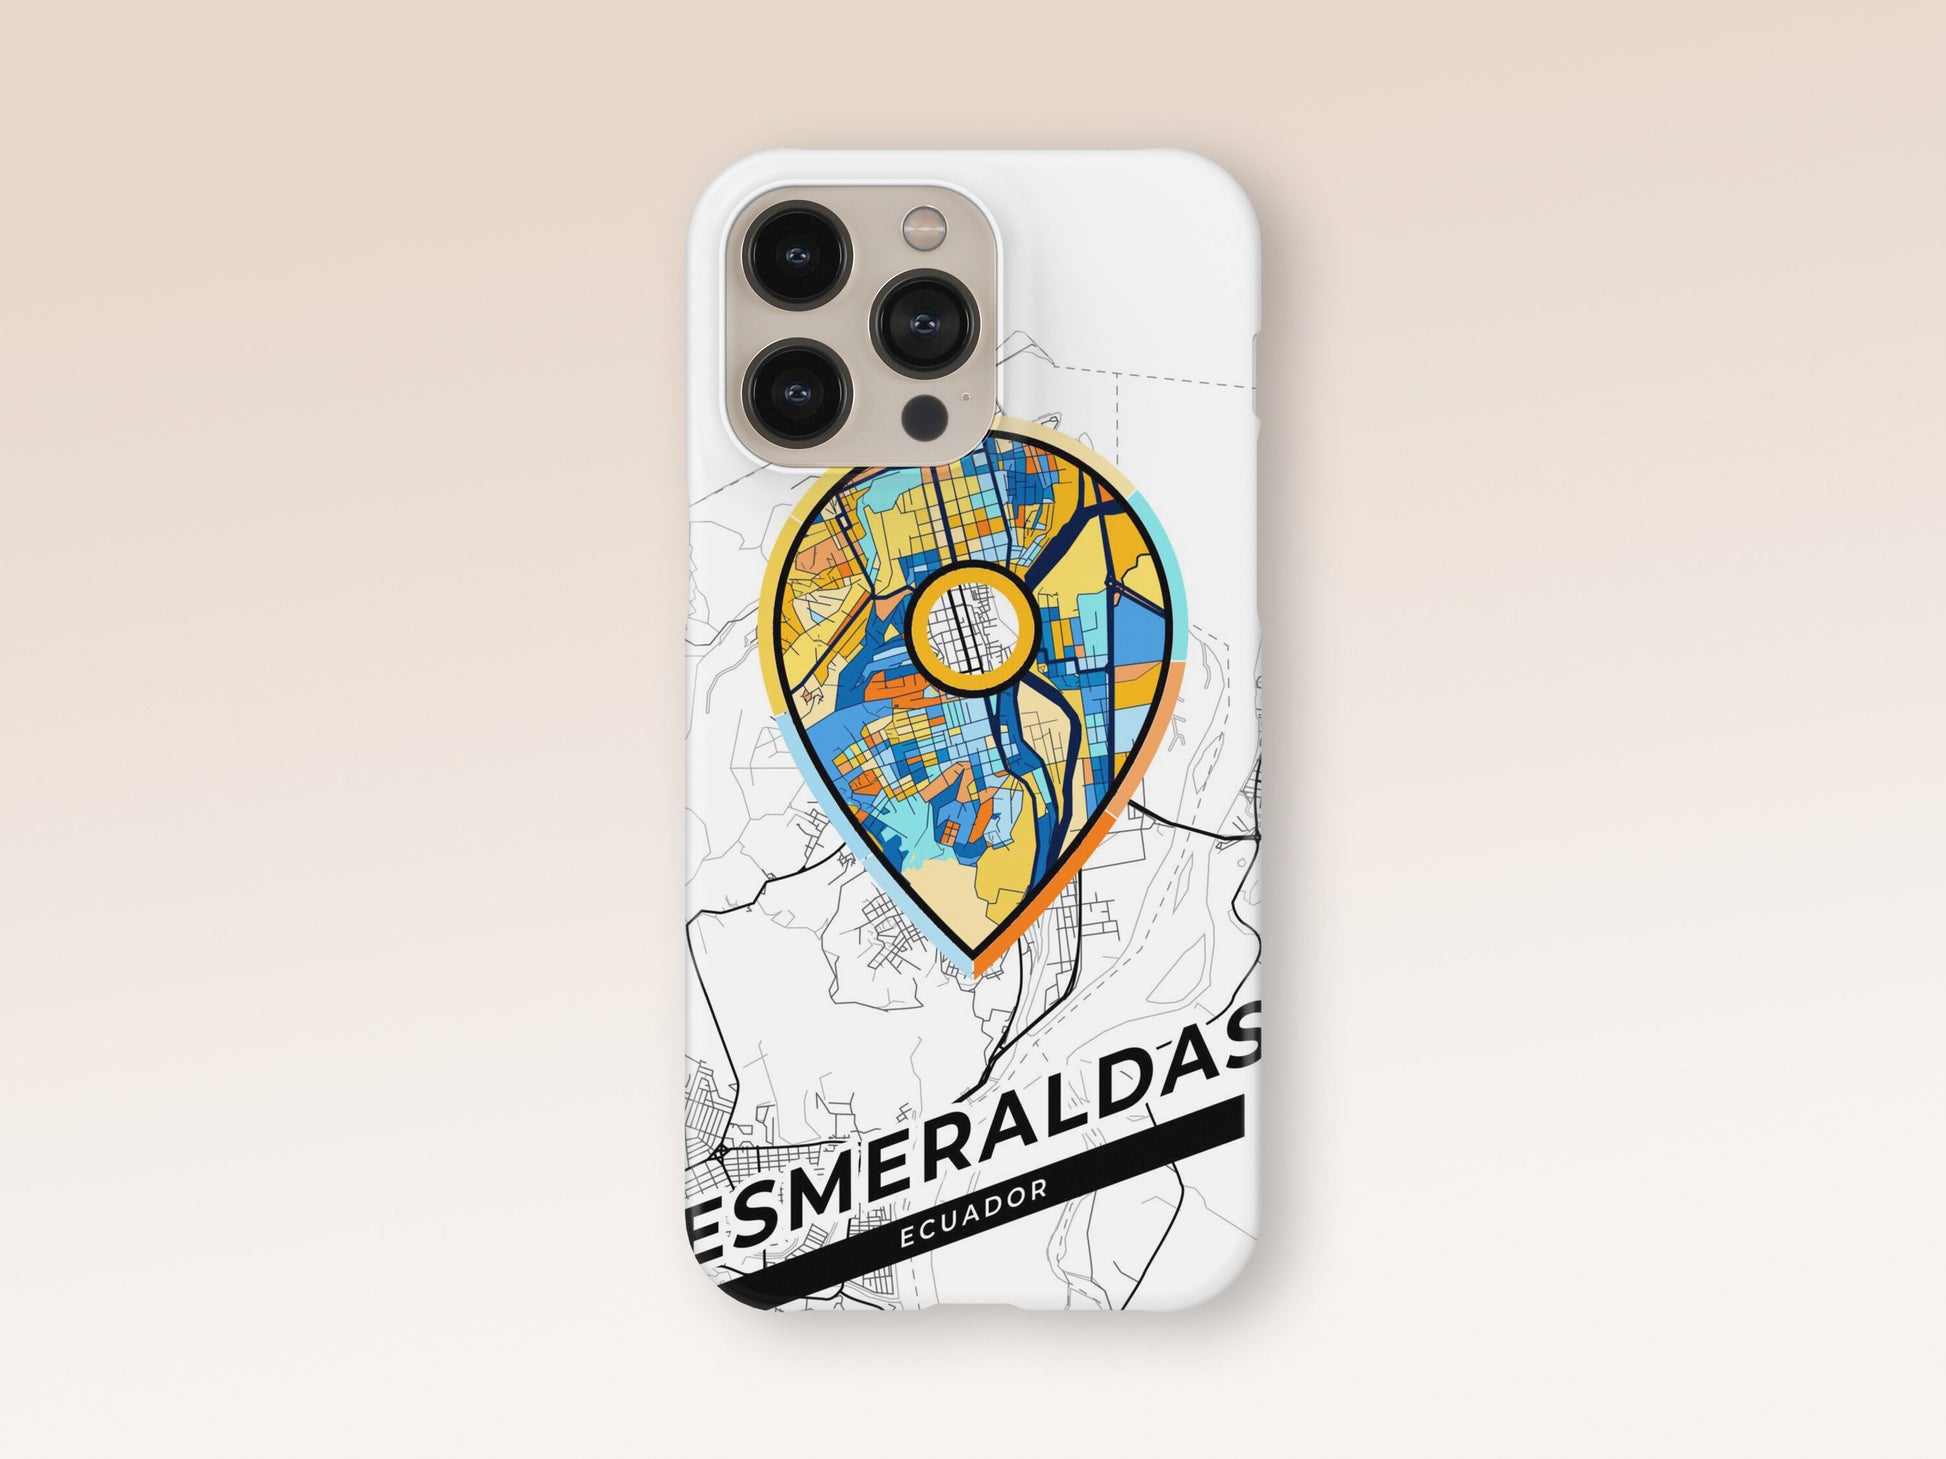 Esmeraldas Ecuador slim phone case with colorful icon. Birthday, wedding or housewarming gift. Couple match cases. 1